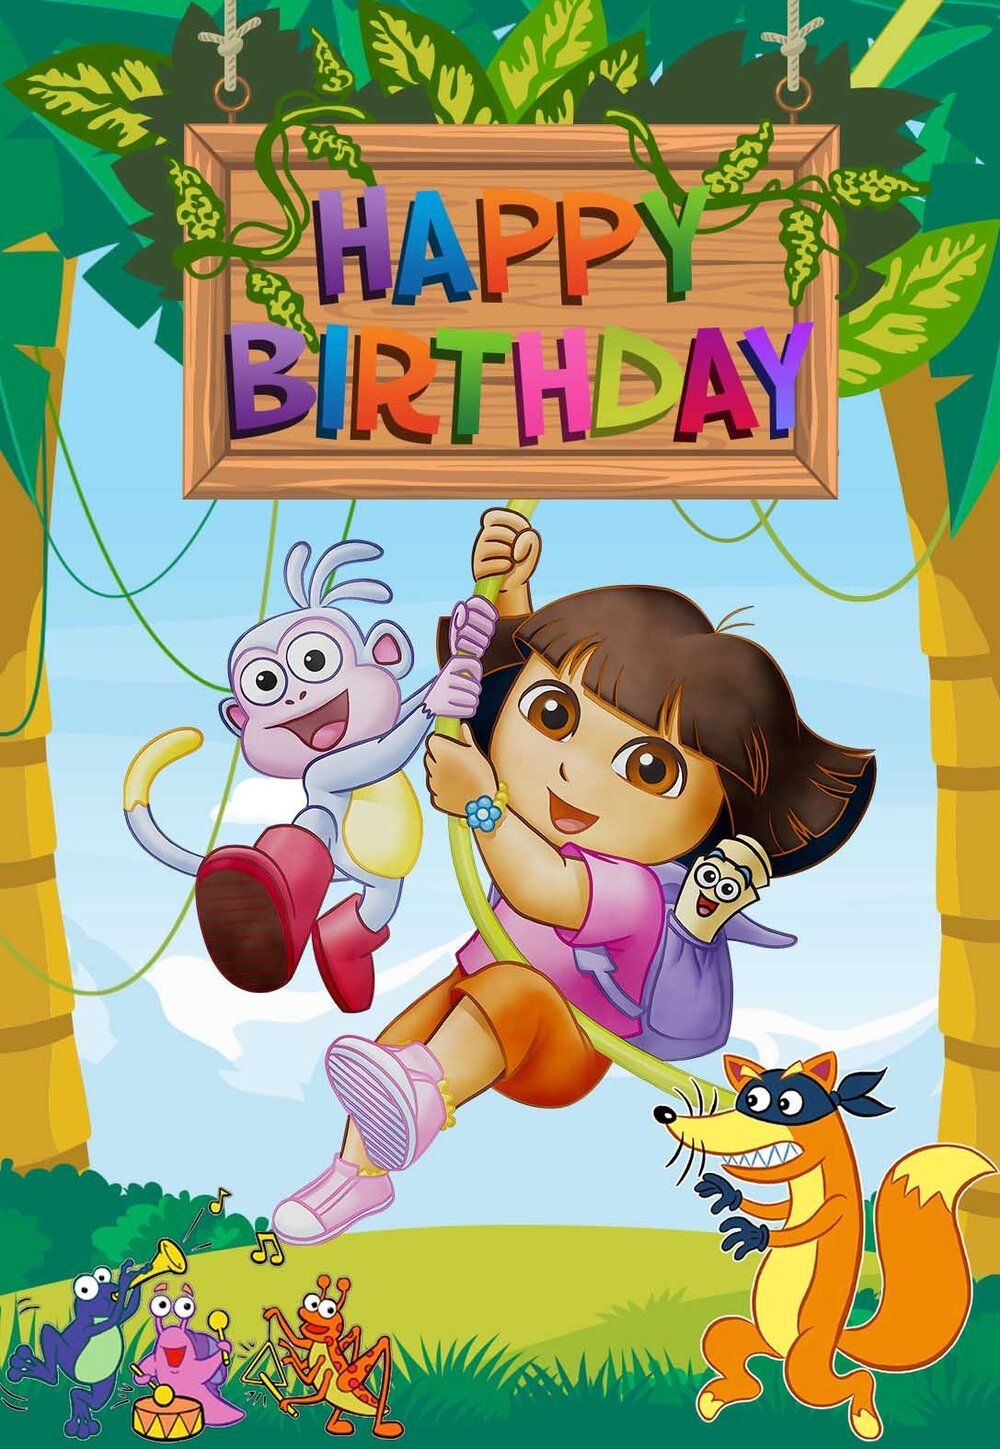 Dora The Explorer Birthday Cards free PRINTBIRTHDAY CARDS Dora The Explorer Dora The Explorer Images Explorer Birthday Party - Dora Birthday Cards Free Printable